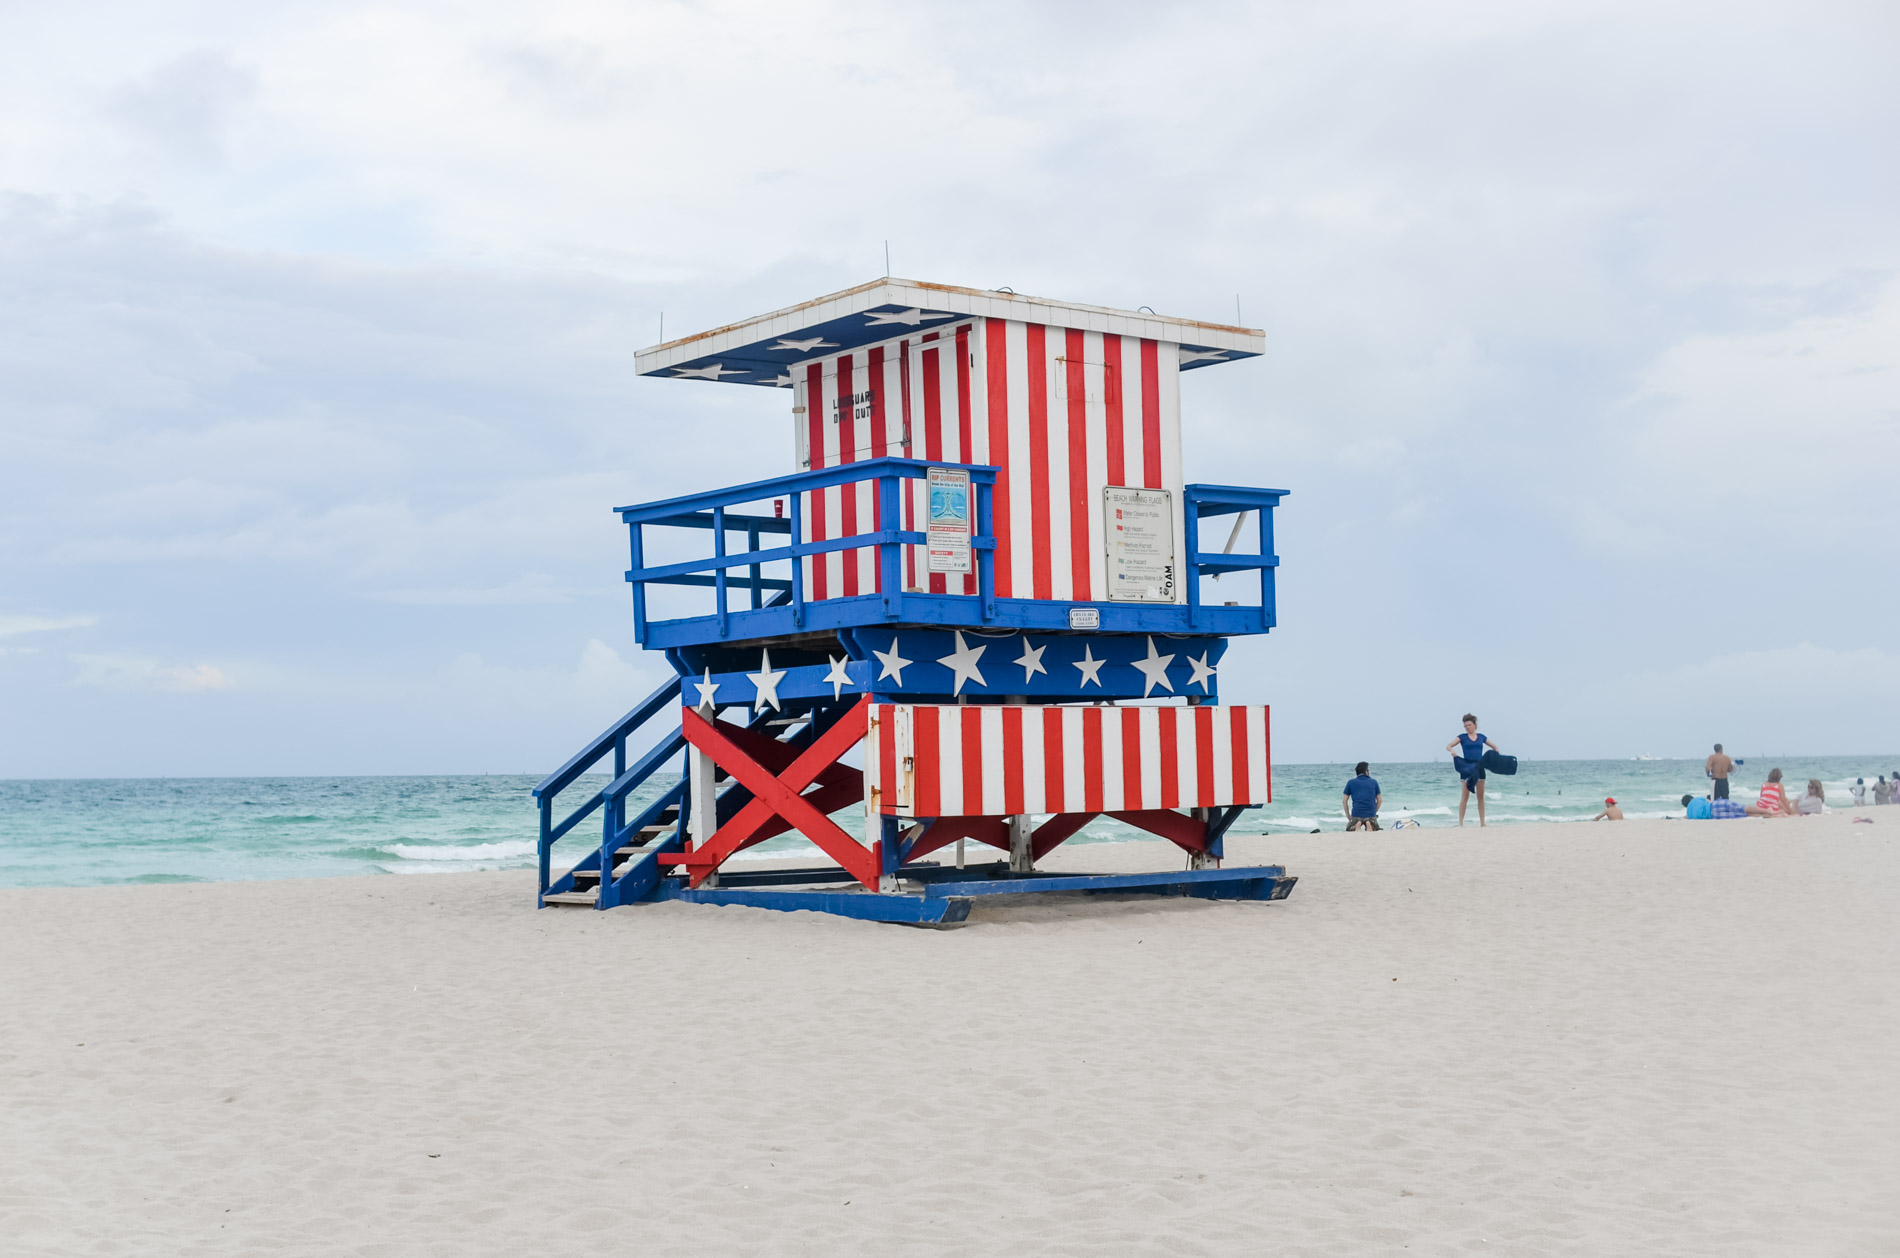 Miami beach hut with stars and stripes design